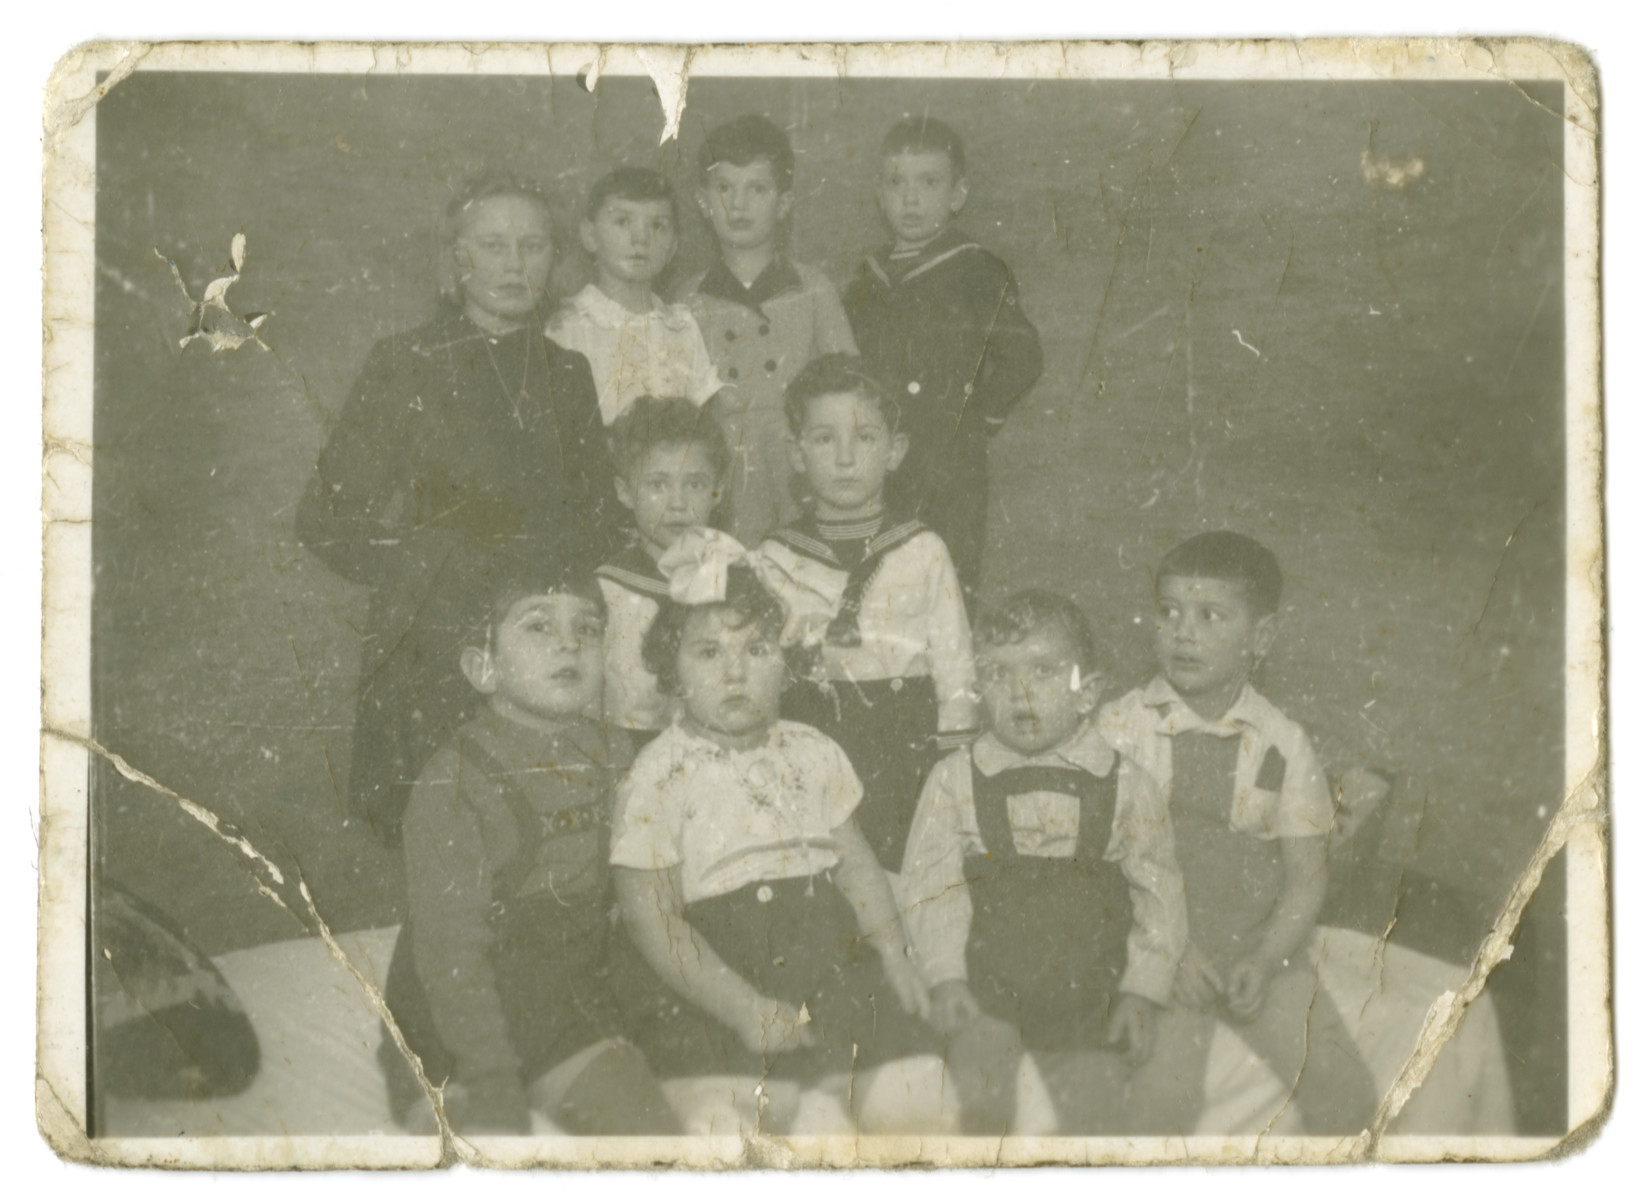 A group of children [probably in a preschool] in prewar Estonia.]